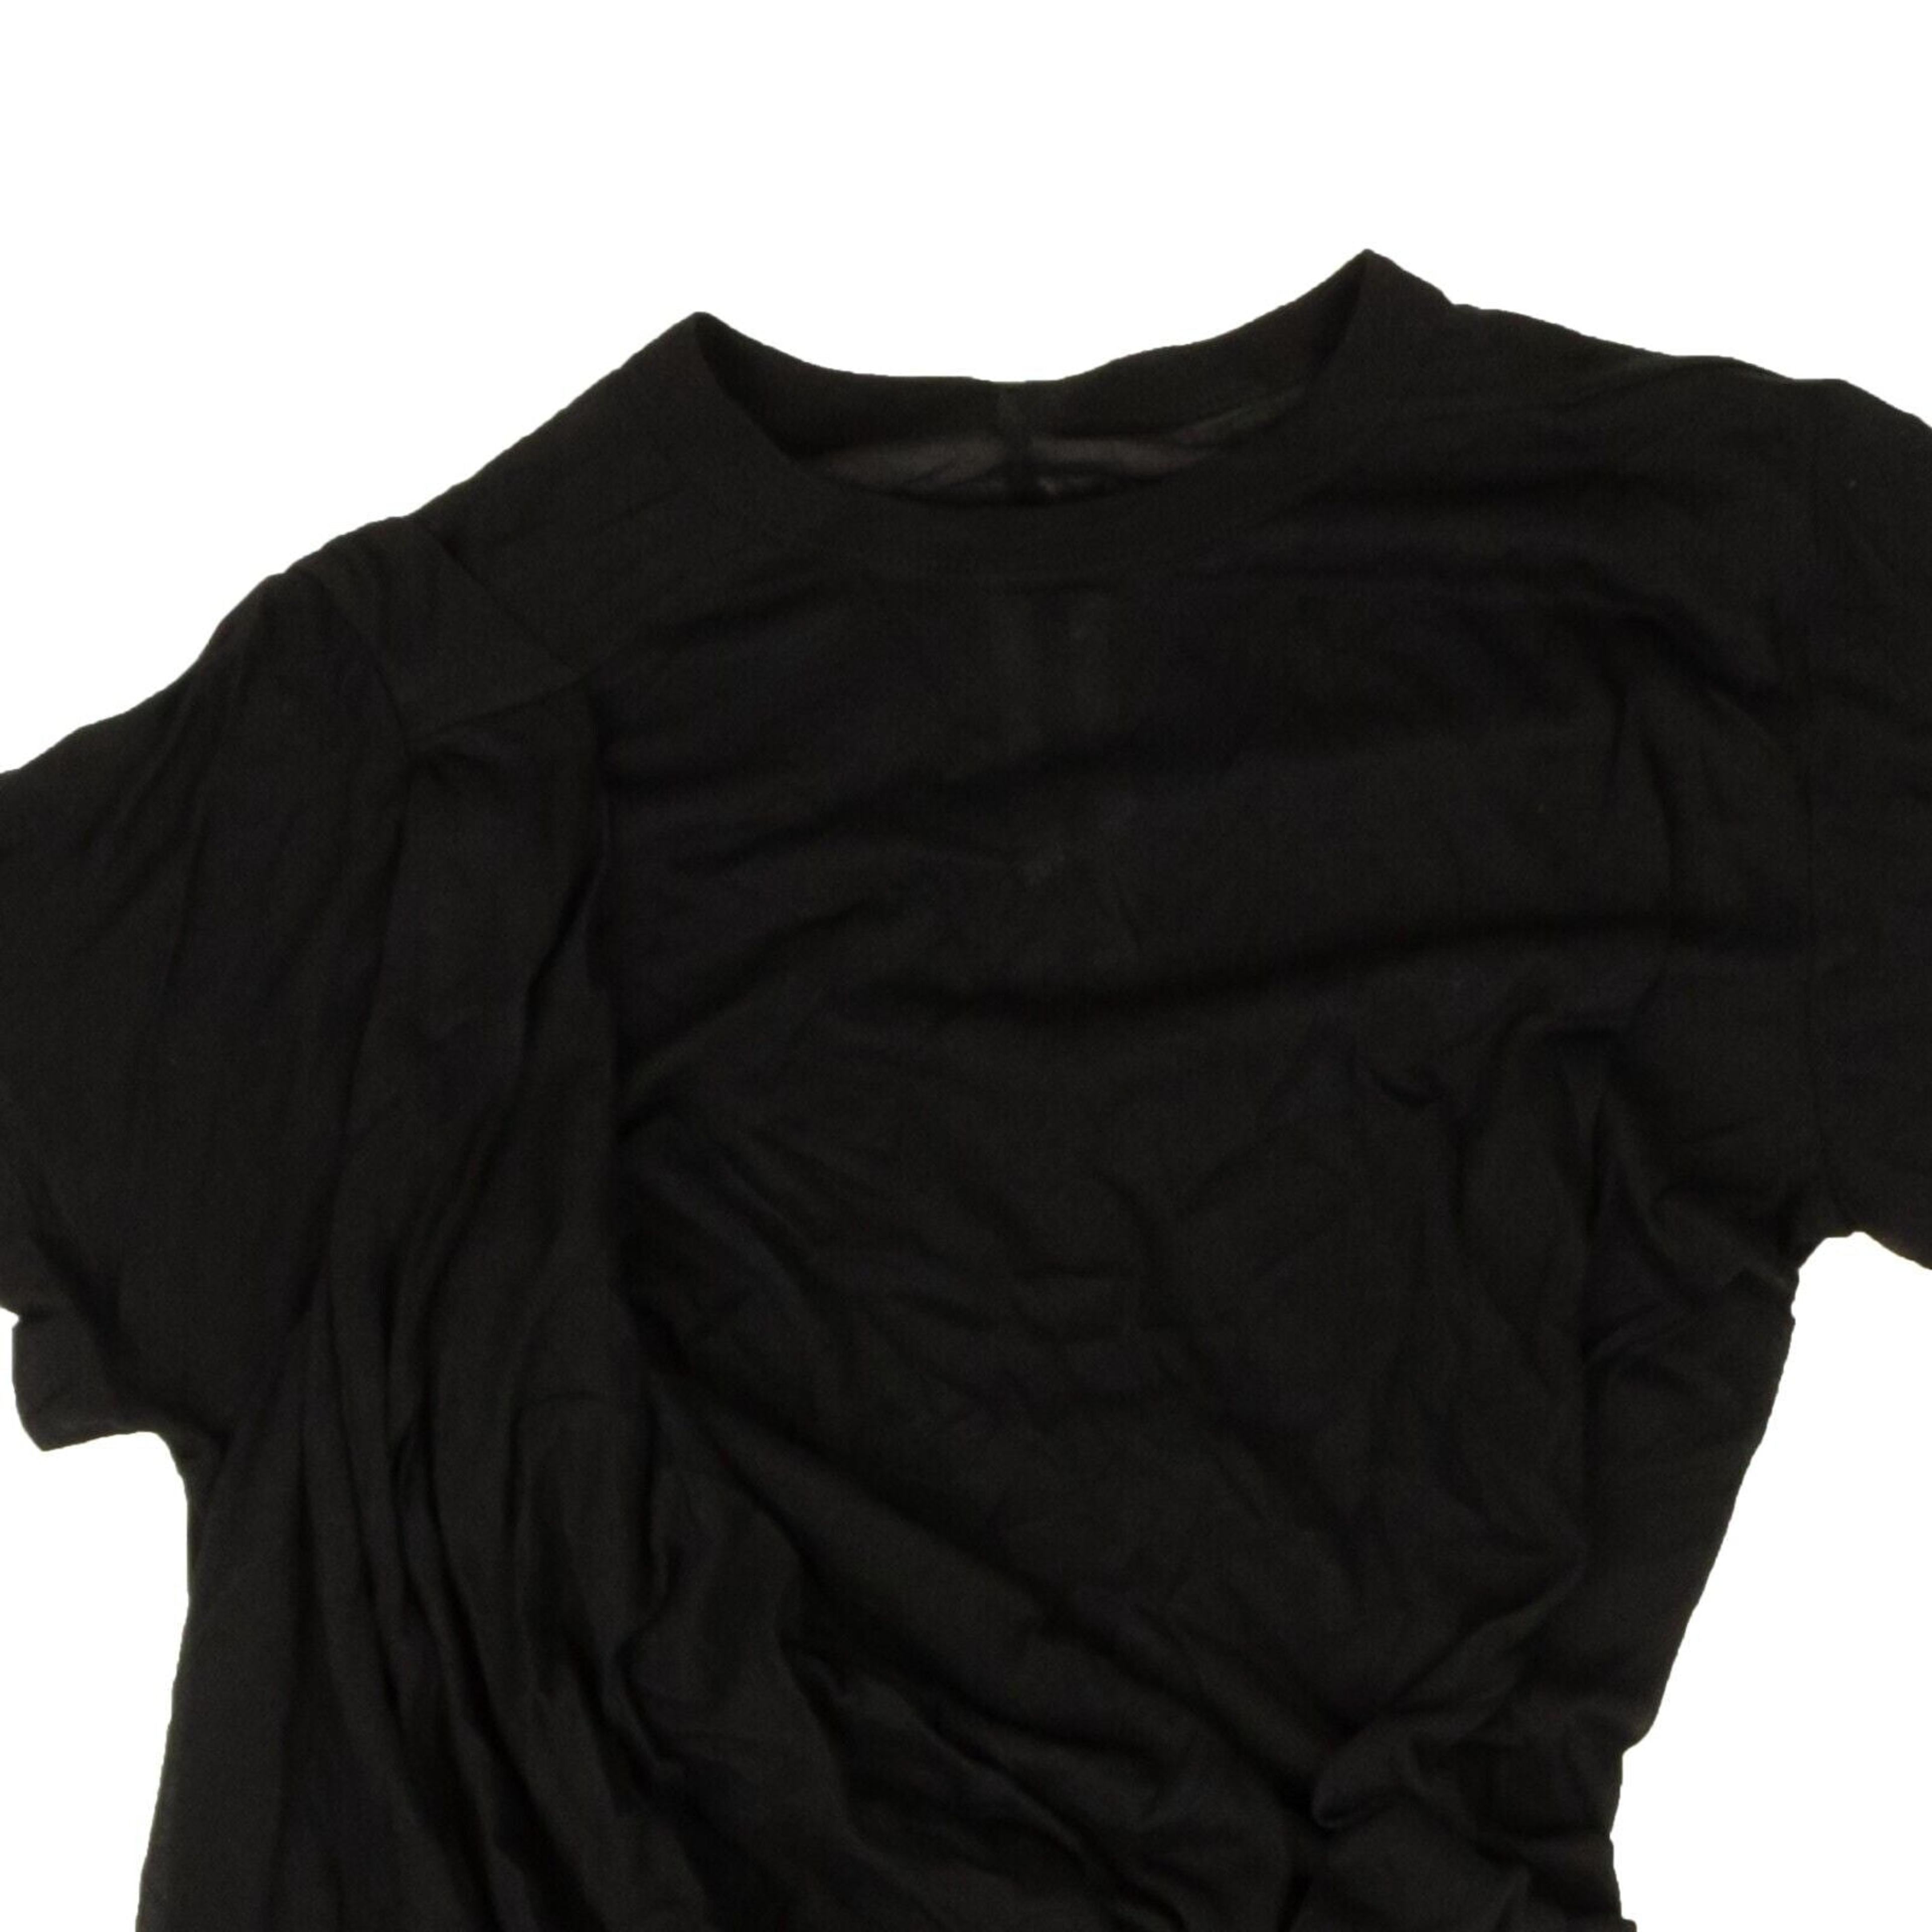 Alternate View 1 of Rick Owens Anthem T-Shirt - Black